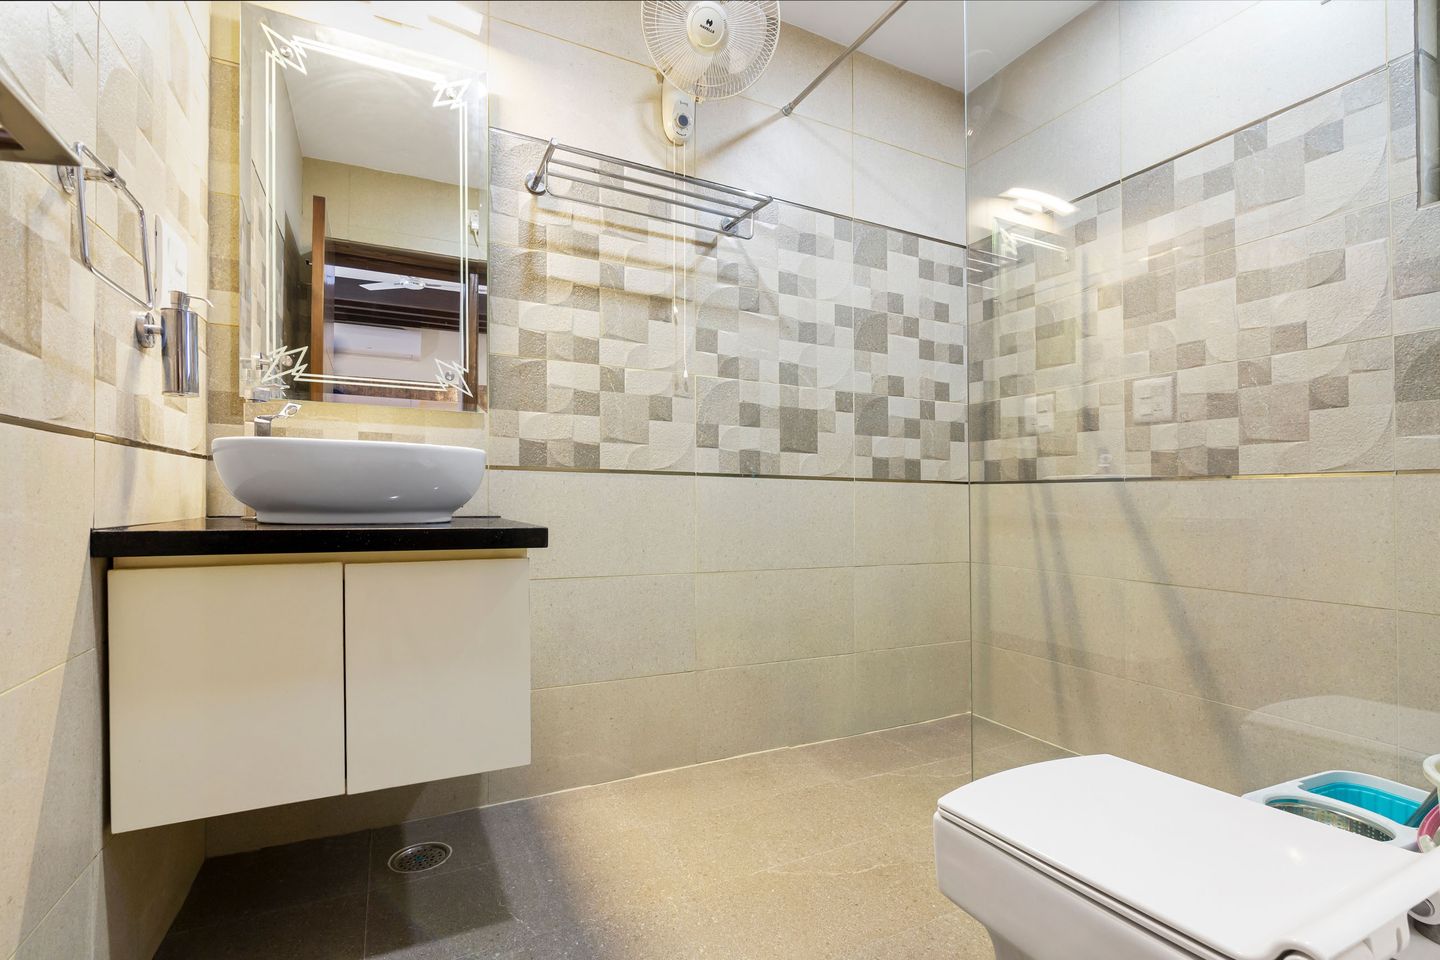 Modern Bathroom Design With Beige Tiles - Livspace